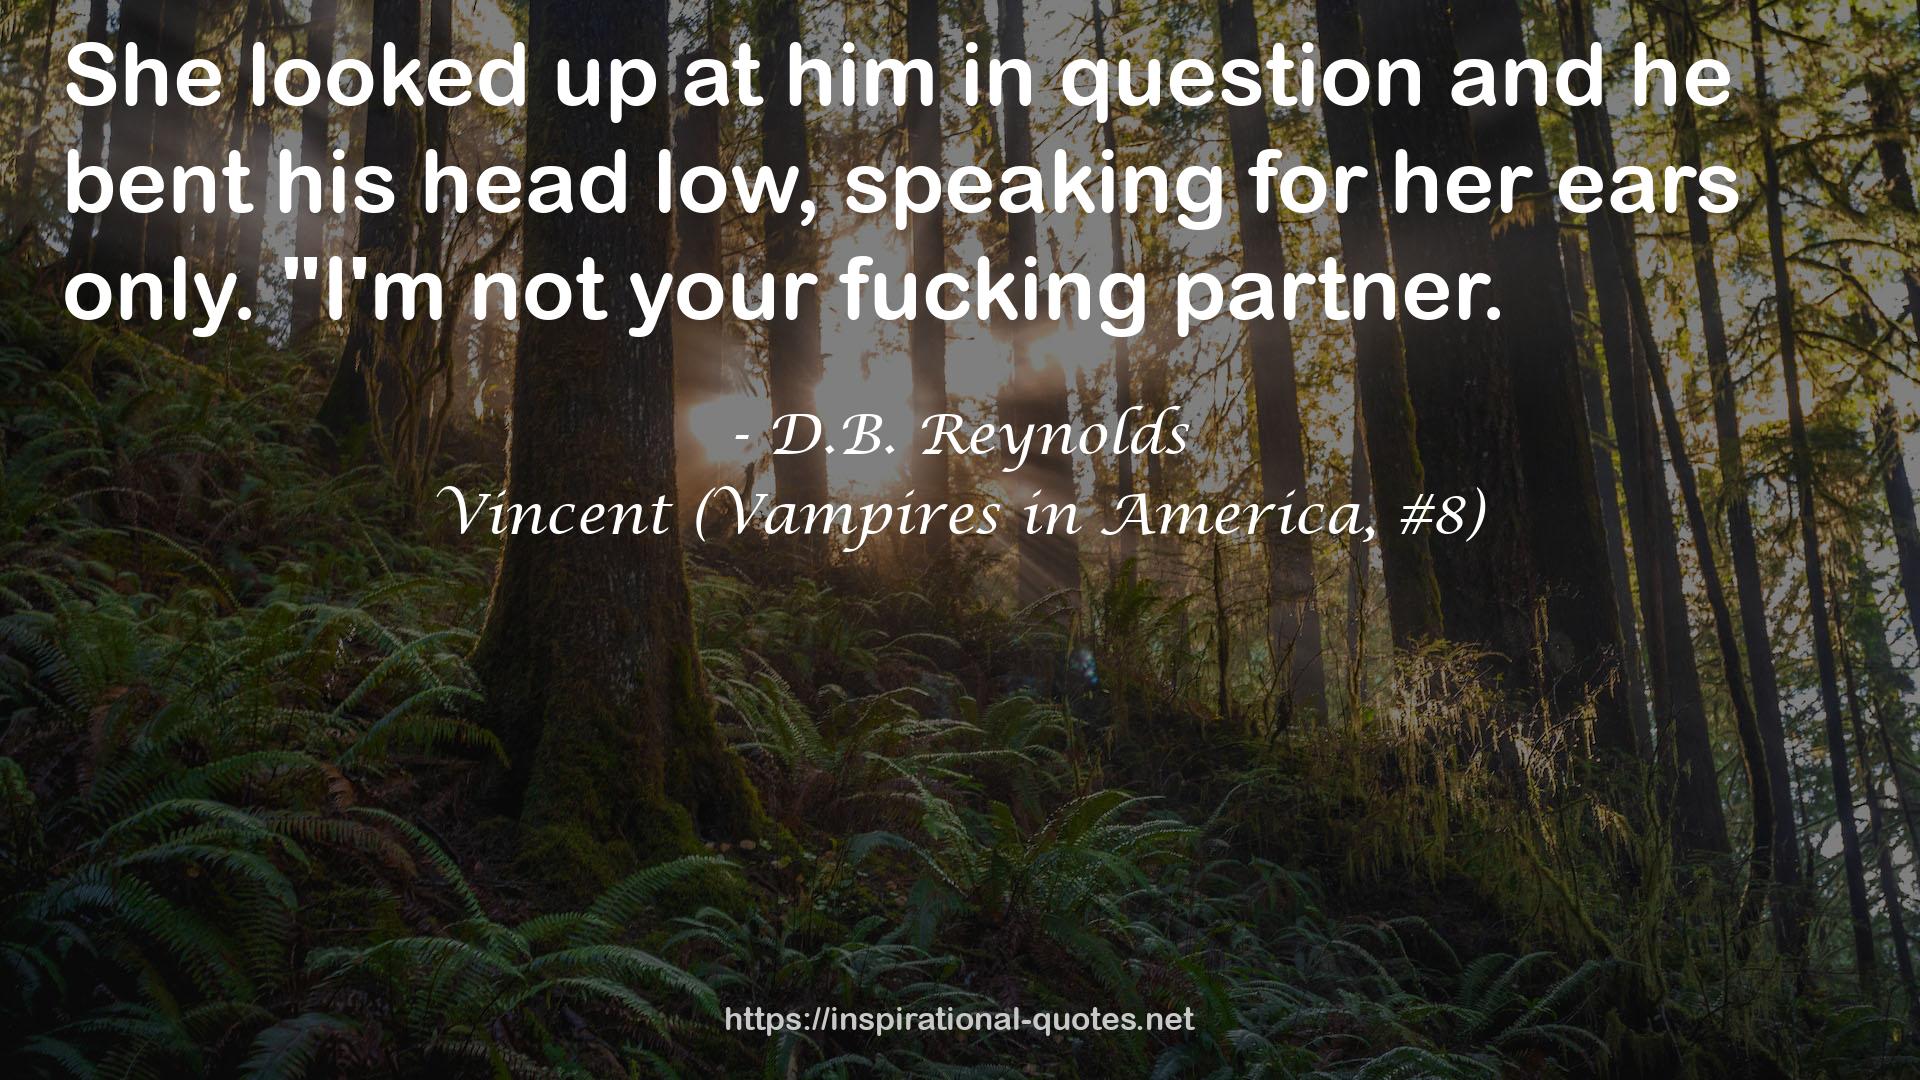 Vincent (Vampires in America, #8) QUOTES